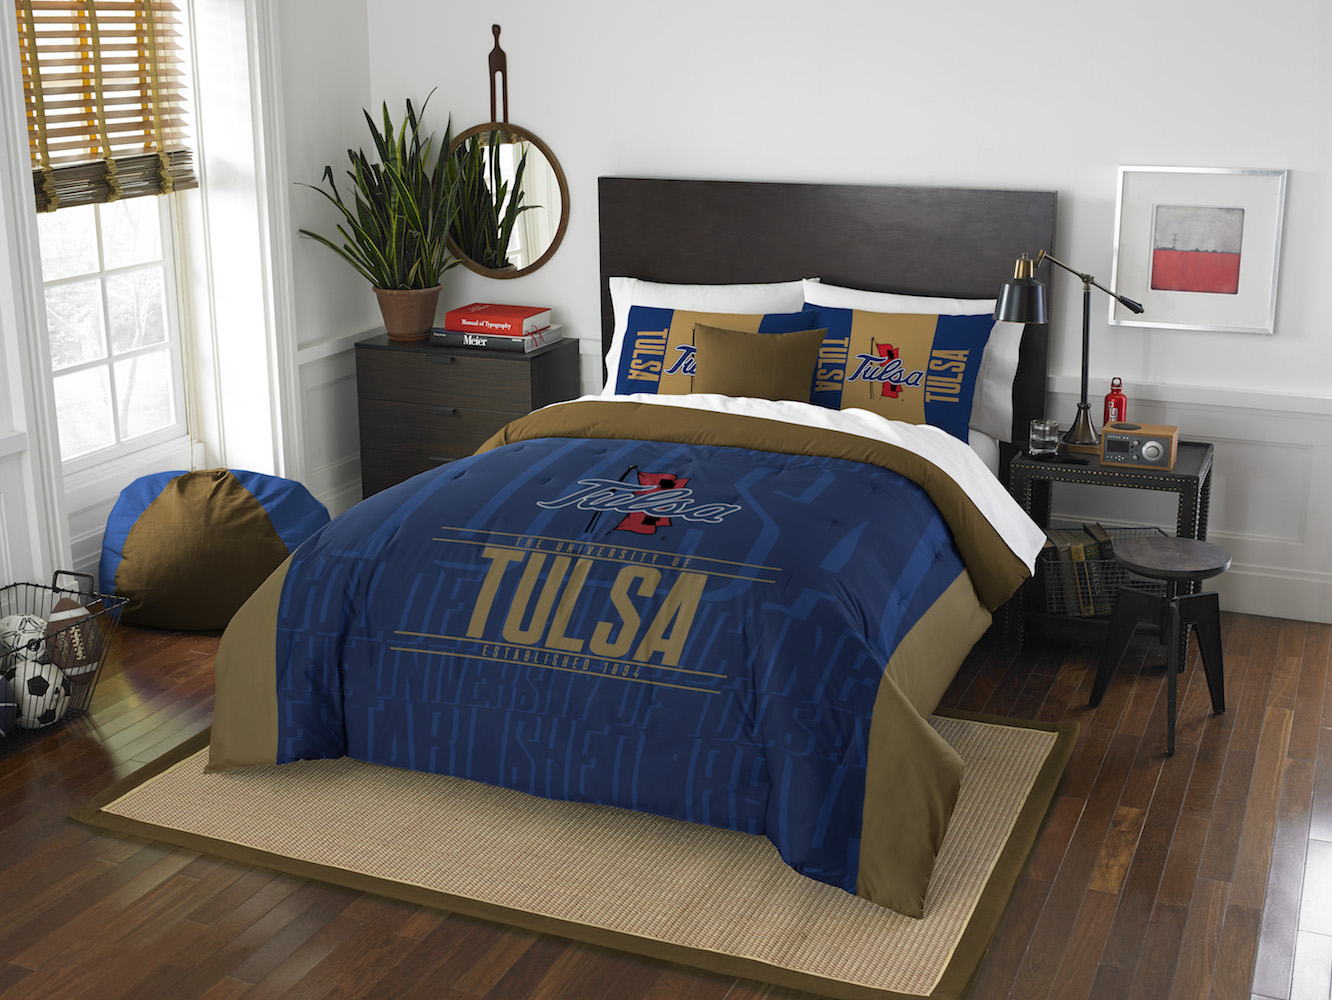 Tulsa Golden Hurricane QUEEN/FULL size Comforter and 2 Shams